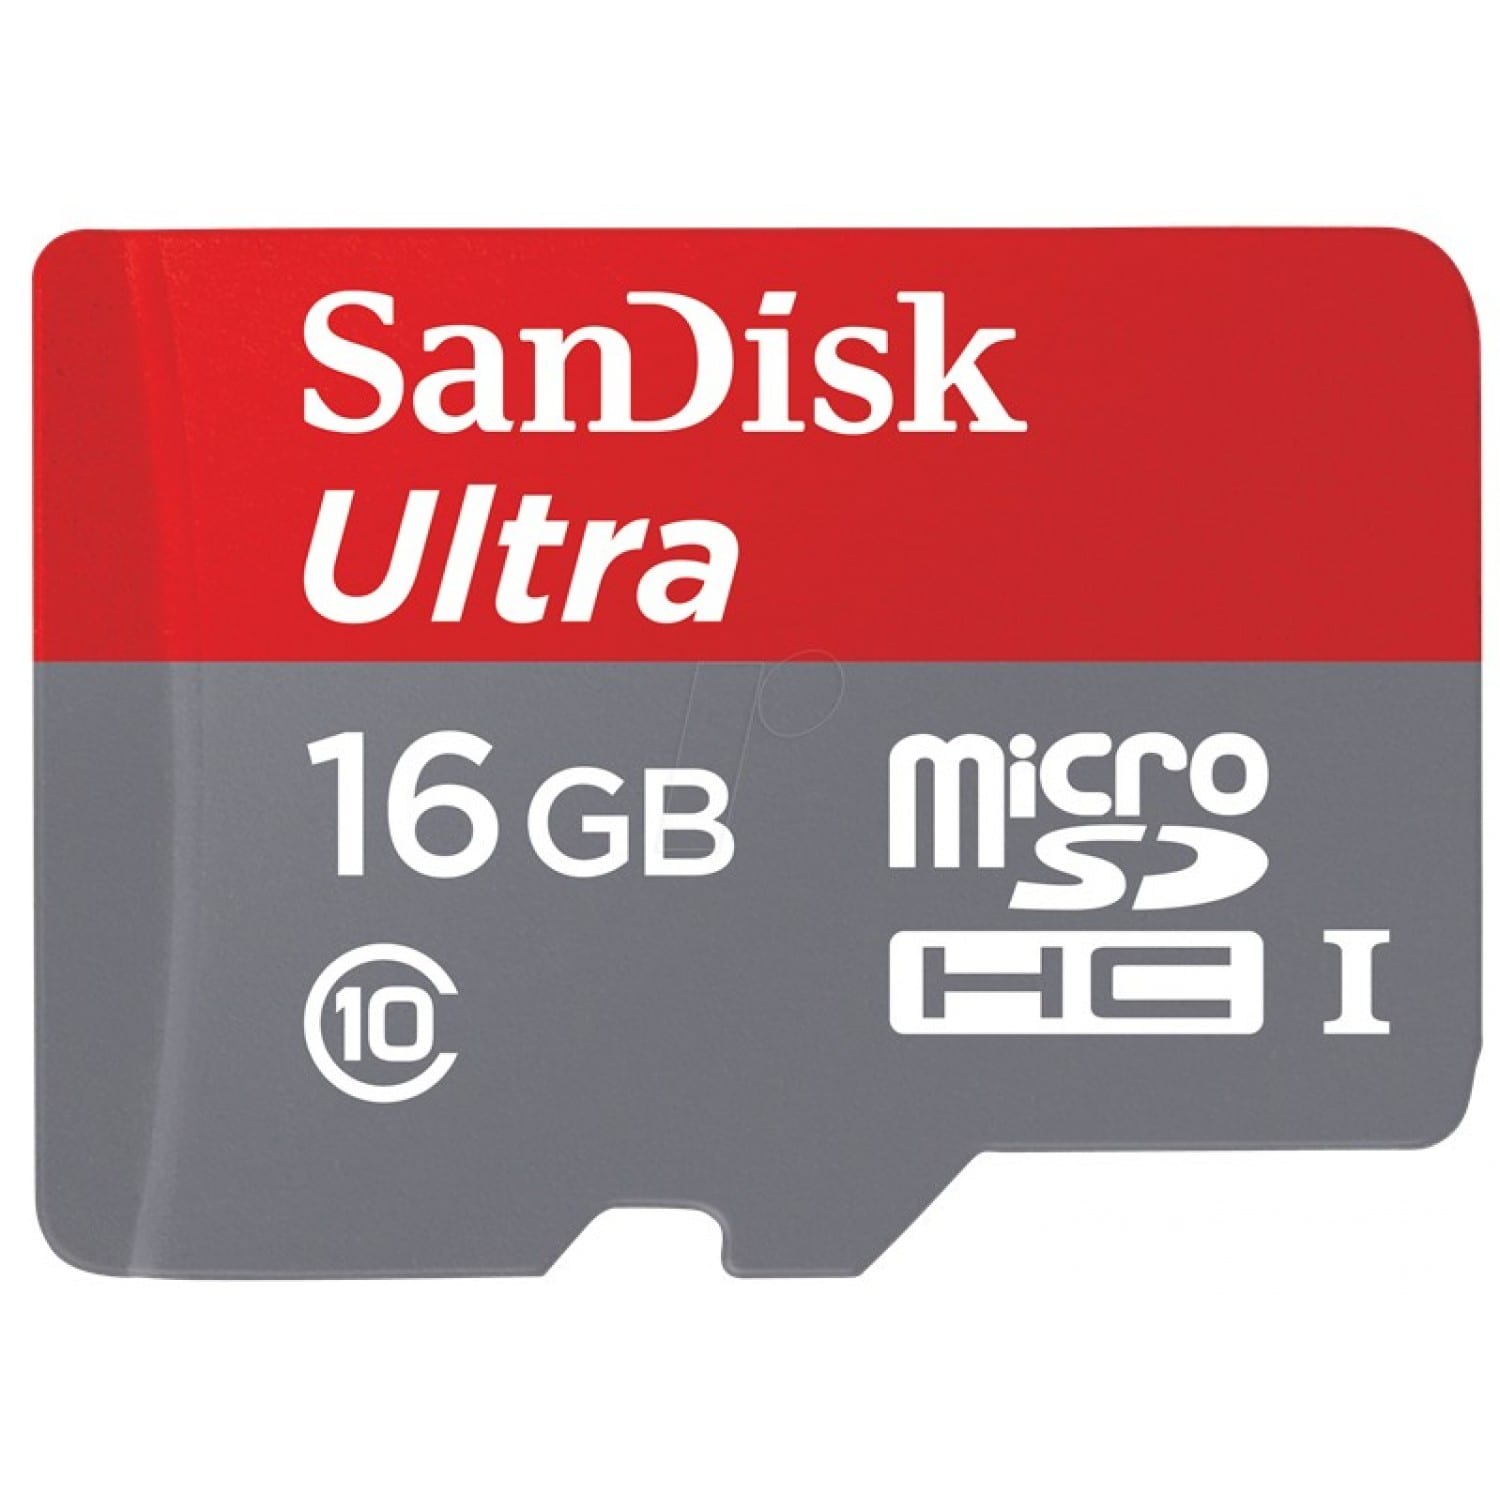 Carte mémoire SD INTEGRAL HC Classe 10 - 8GB Ultima Pro Full HD